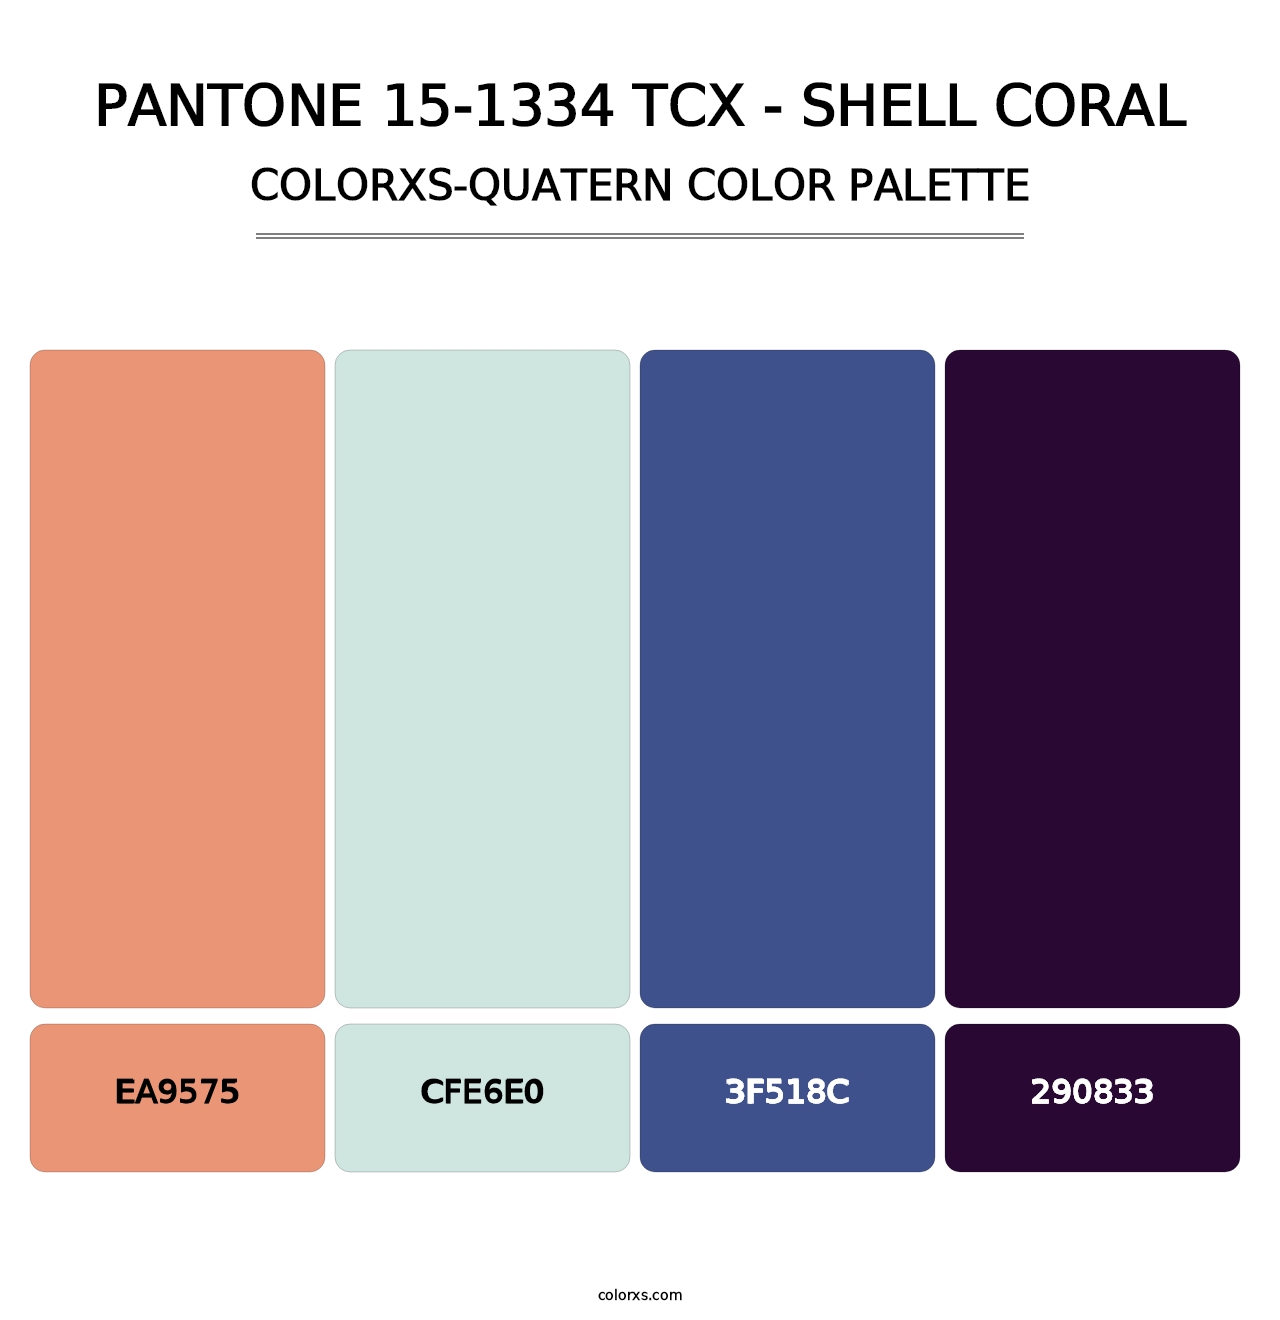 PANTONE 15-1334 TCX - Shell Coral - Colorxs Quatern Palette